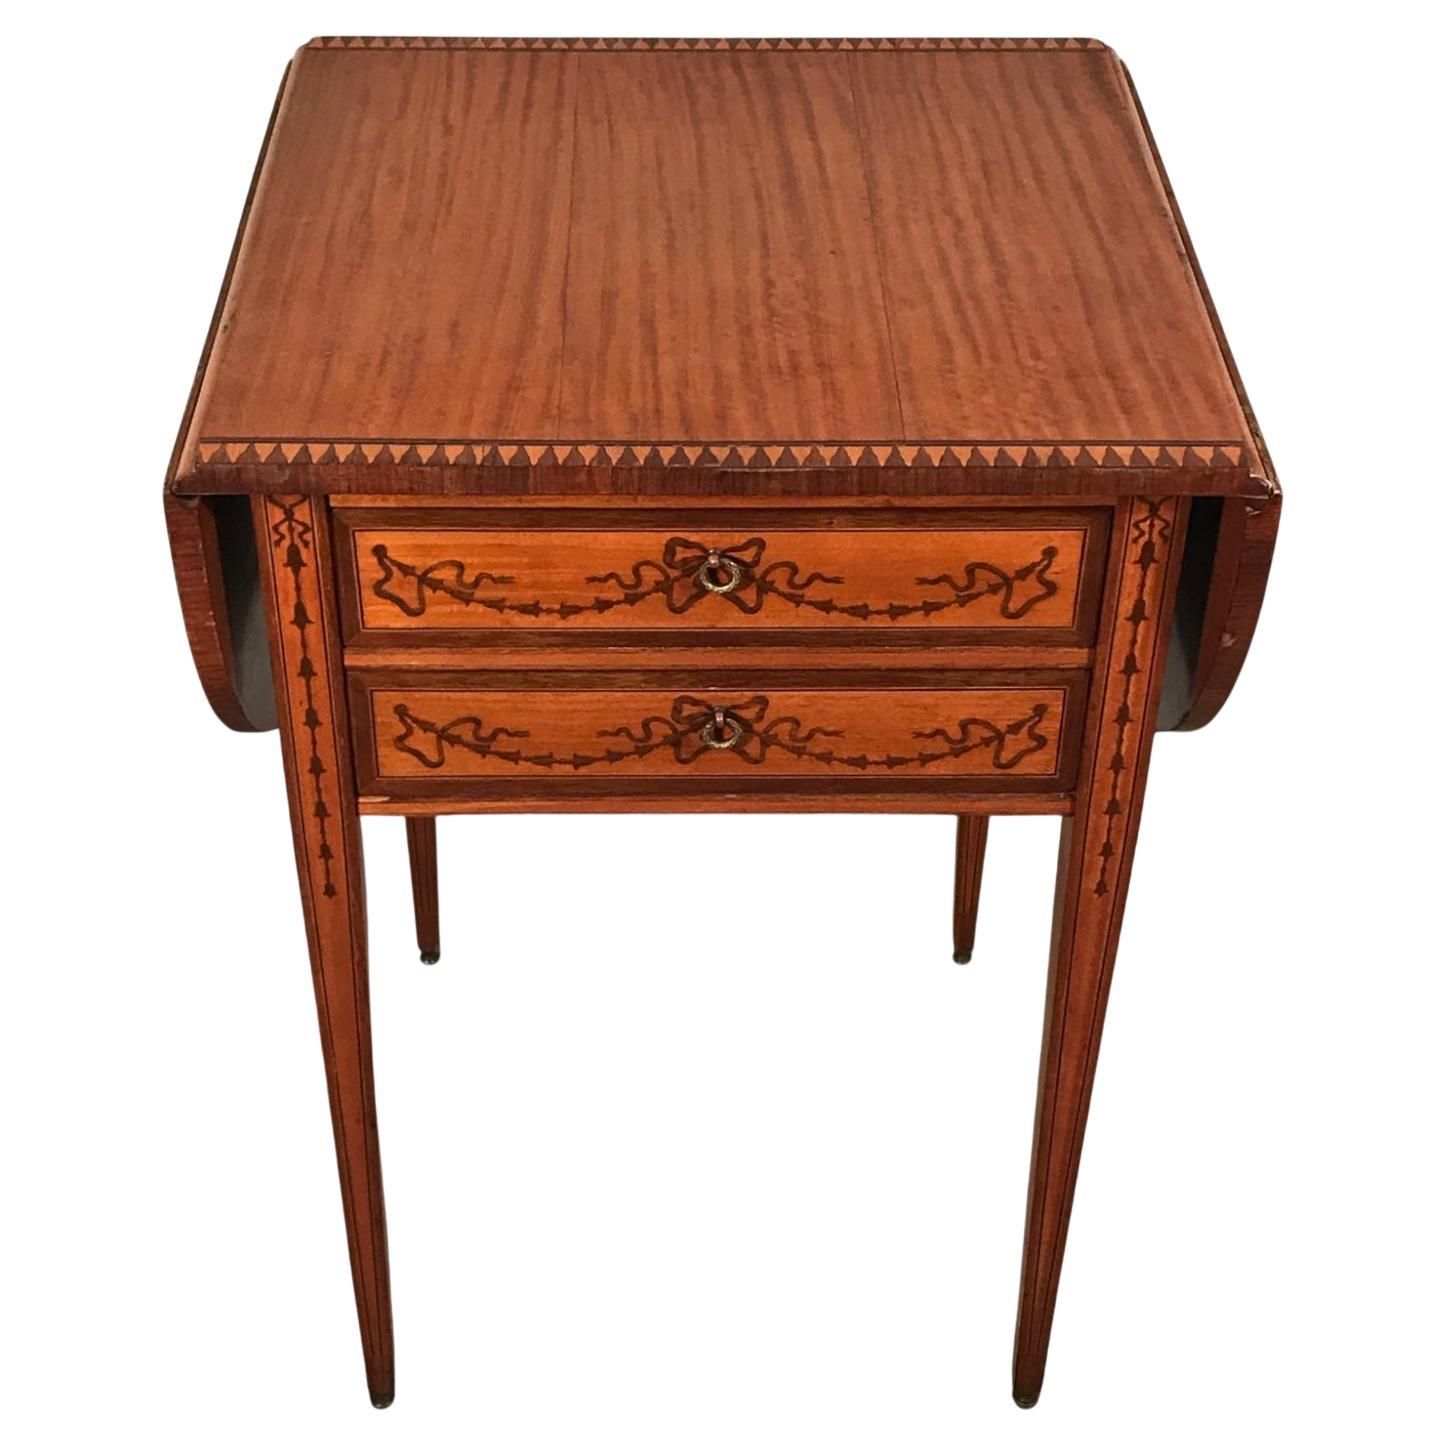 Side Table, 19-20th century Georgian style